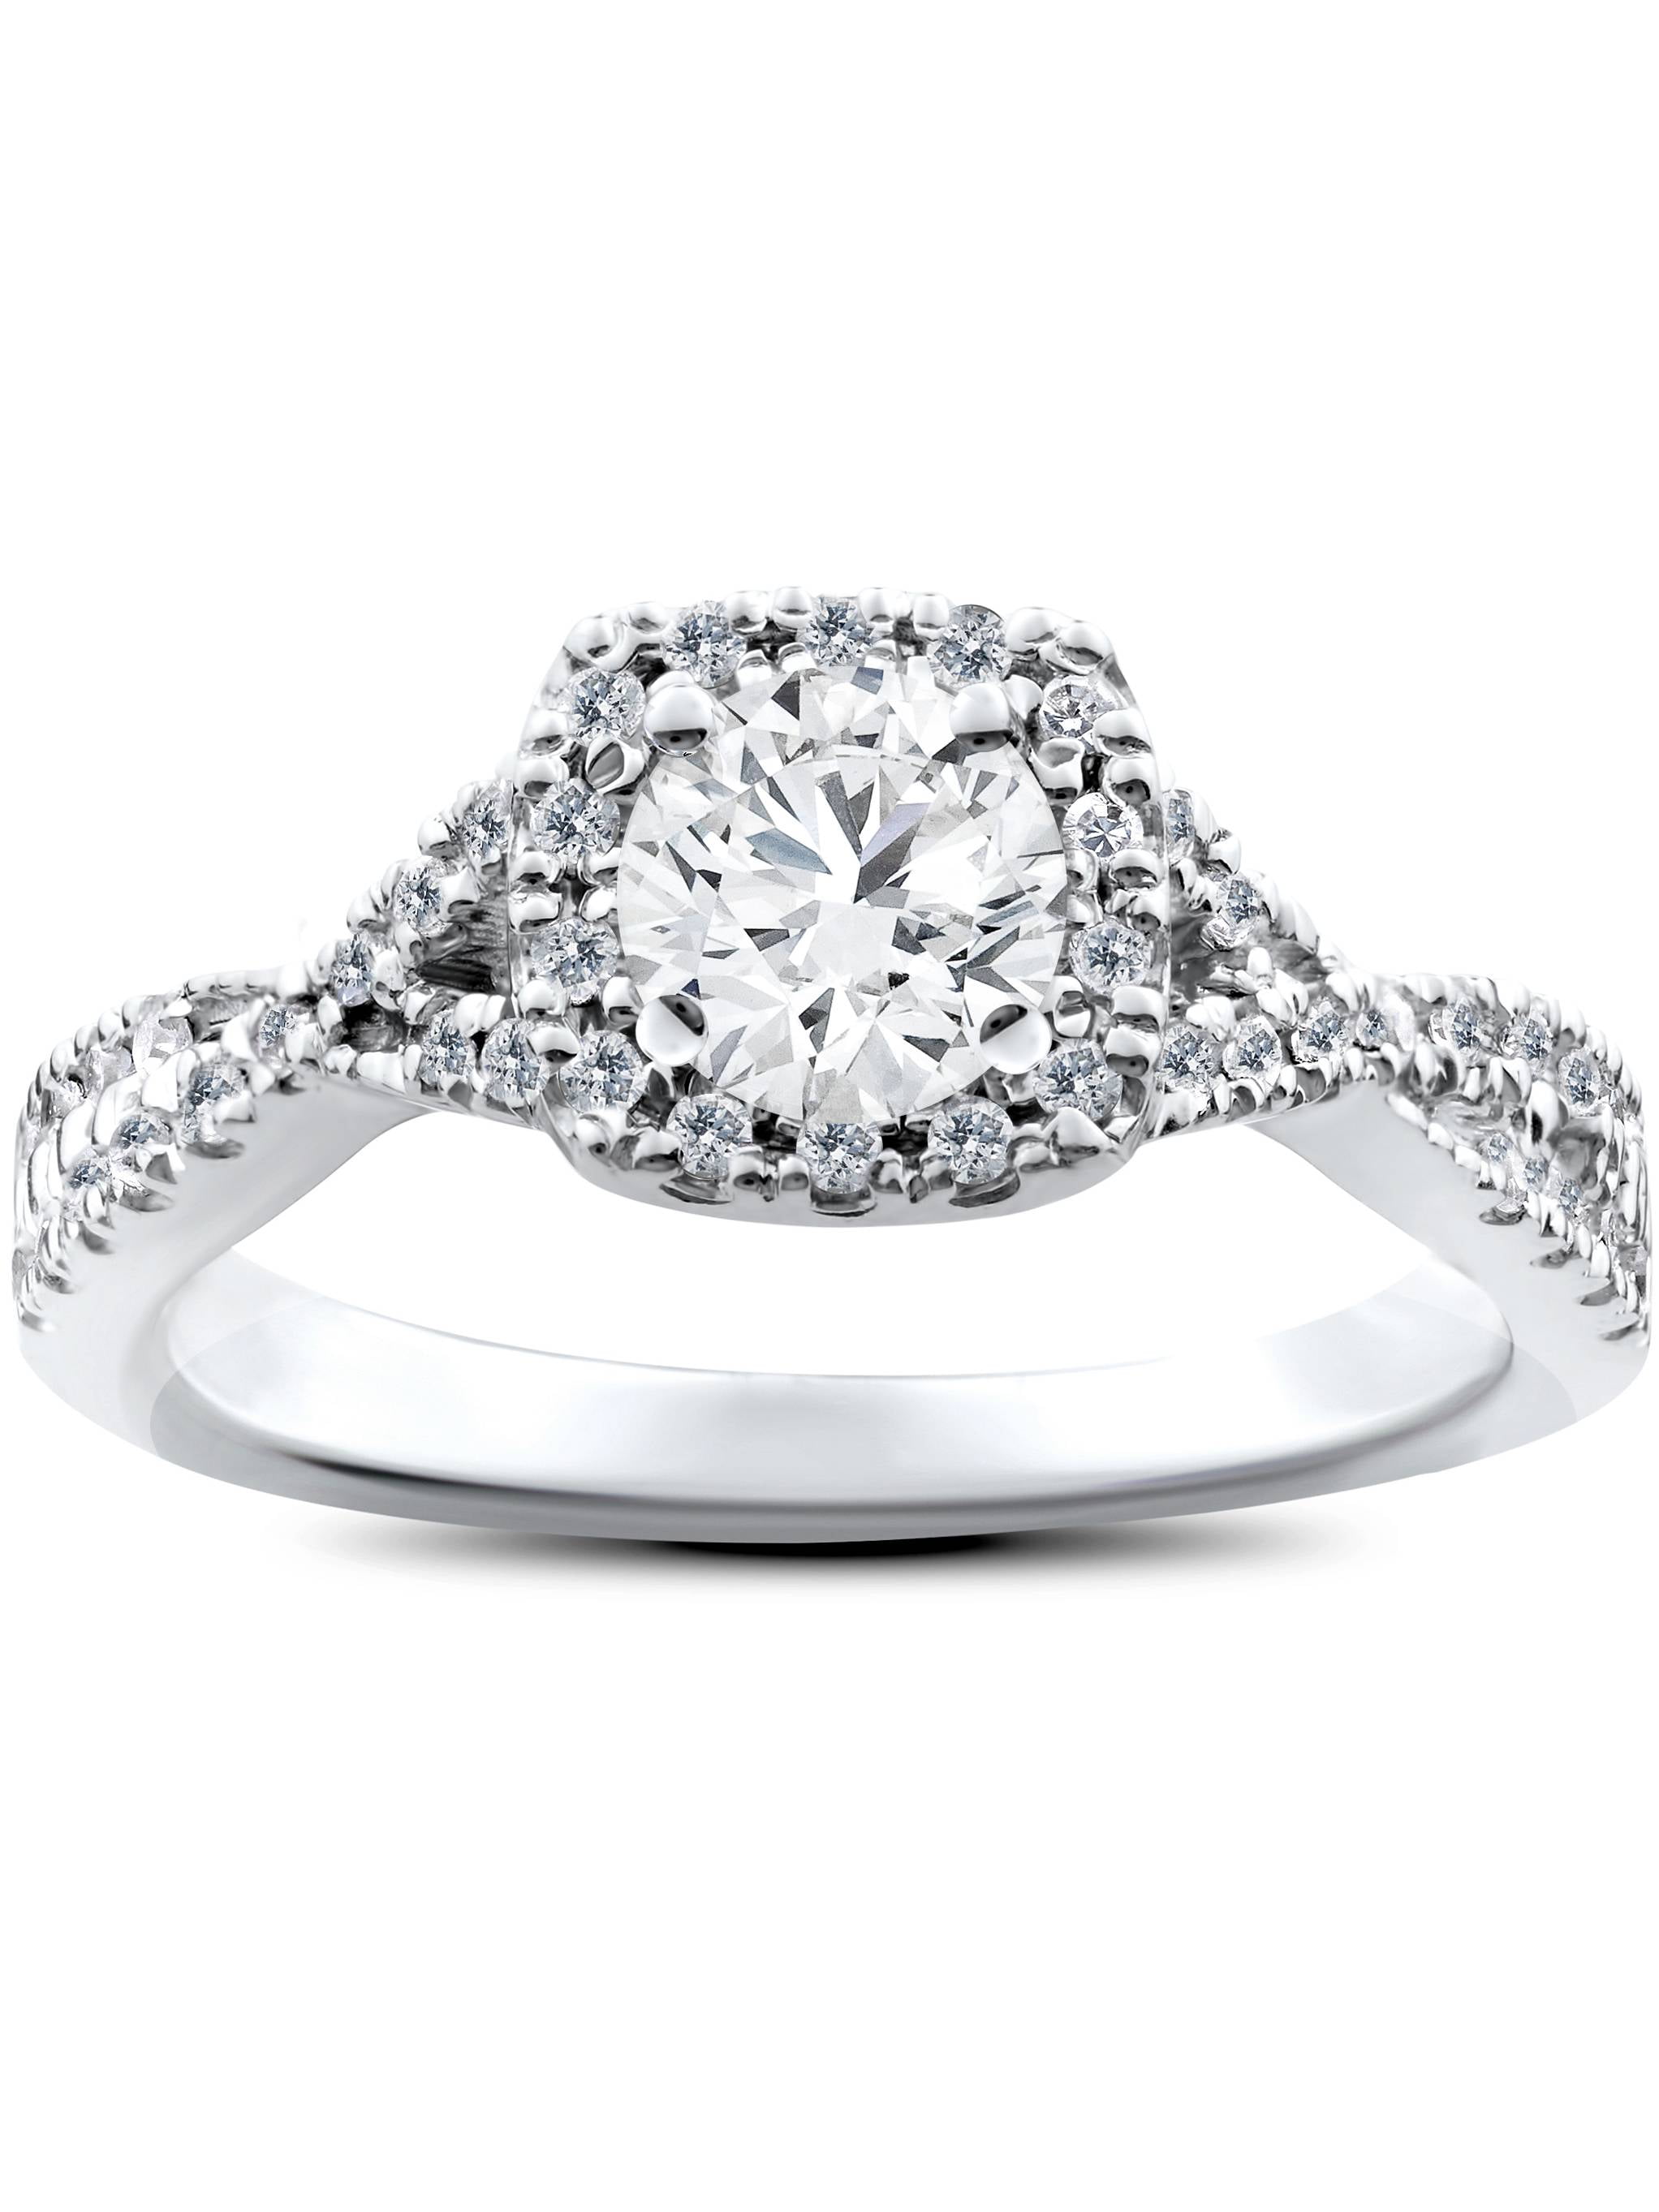 1ct diamond engagement ring